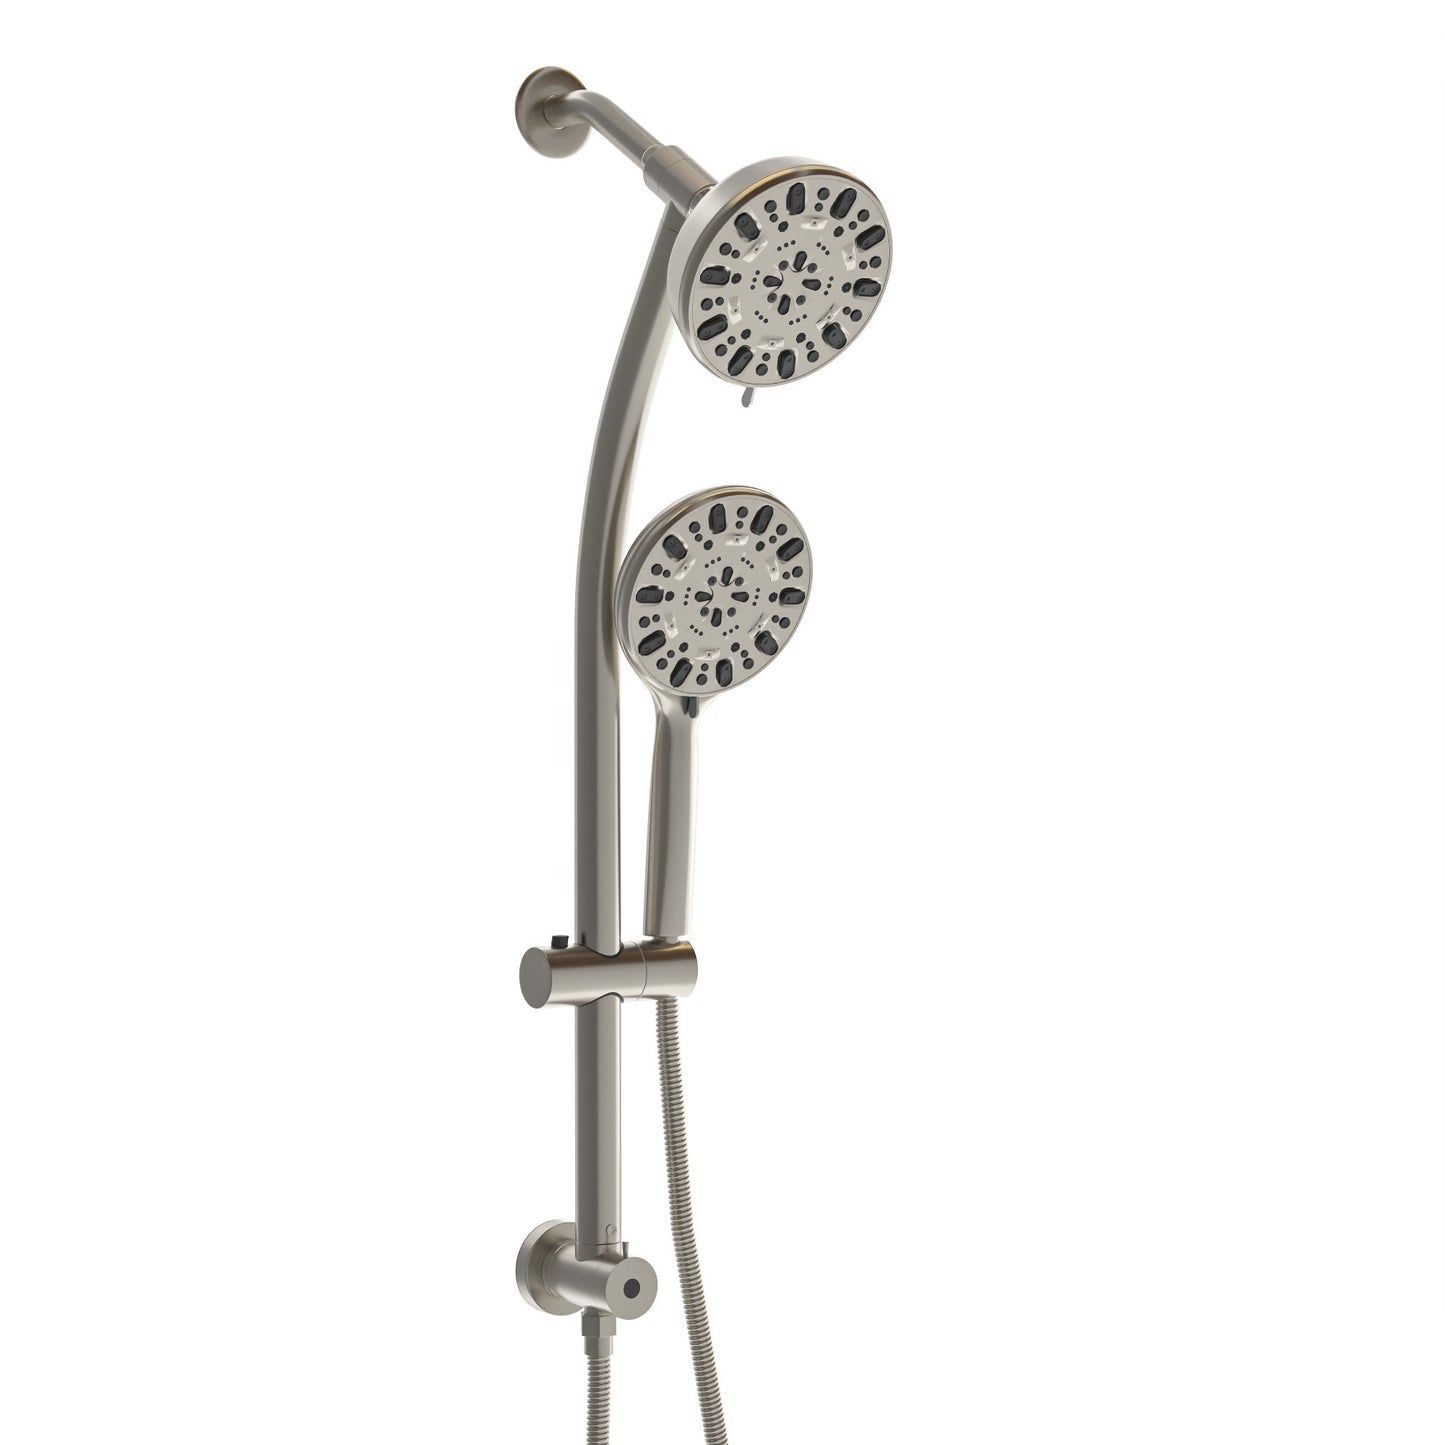 Multi Function Dual Shower Head - Shower System with 4.7" Rain Showerhead, 7-Function Hand Shower, Adjustable Slide Bar,Brushed Nickel